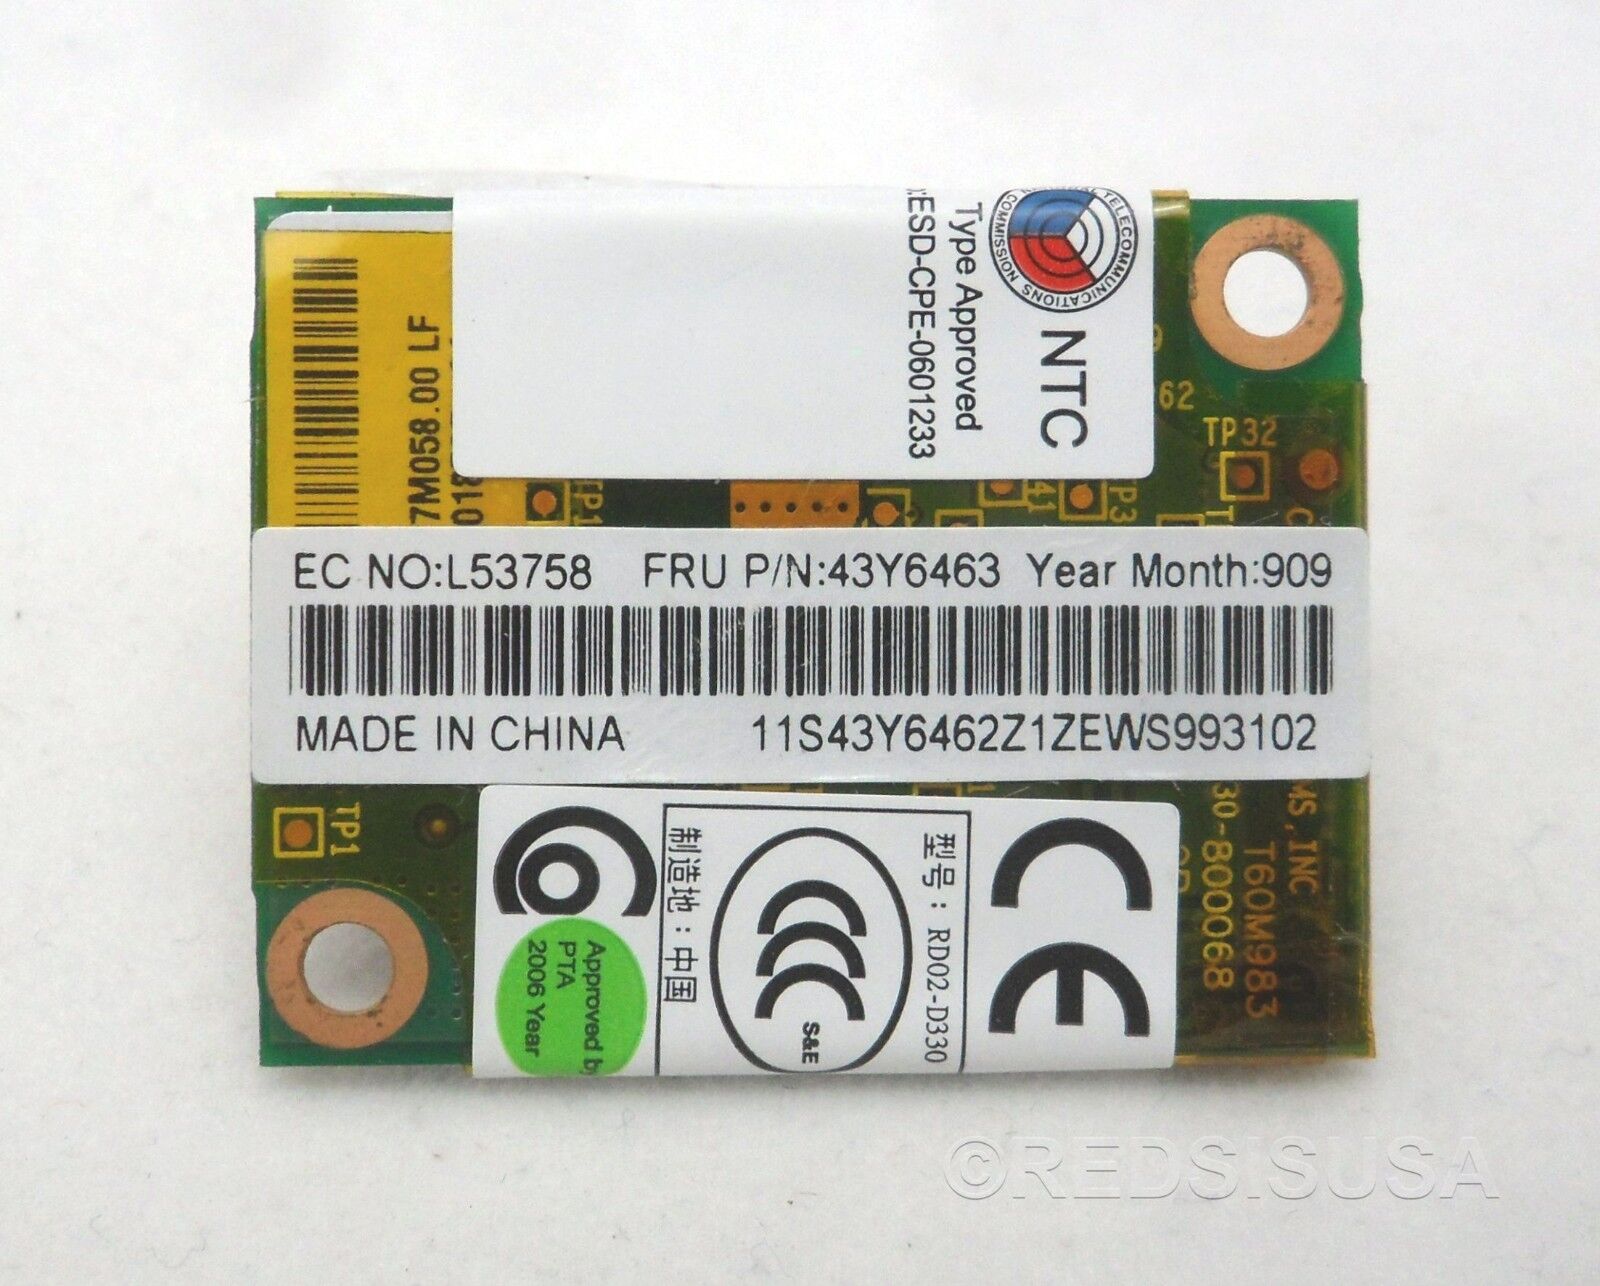 56K Modem Card Model RD02-D330 1